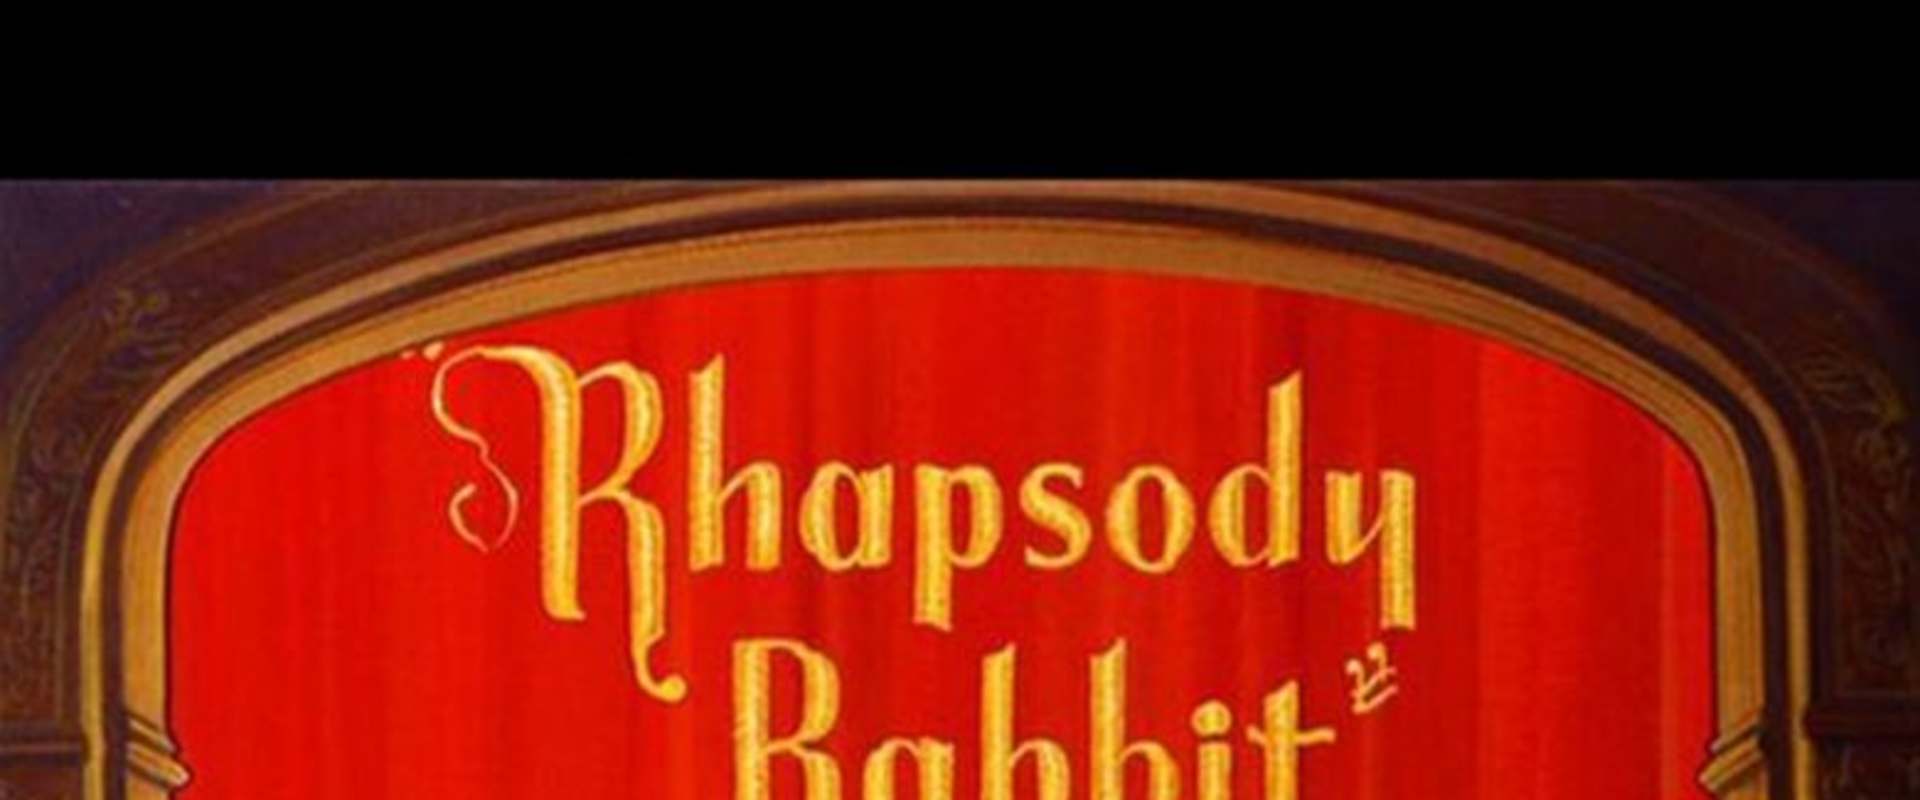 Rhapsody Rabbit background 2